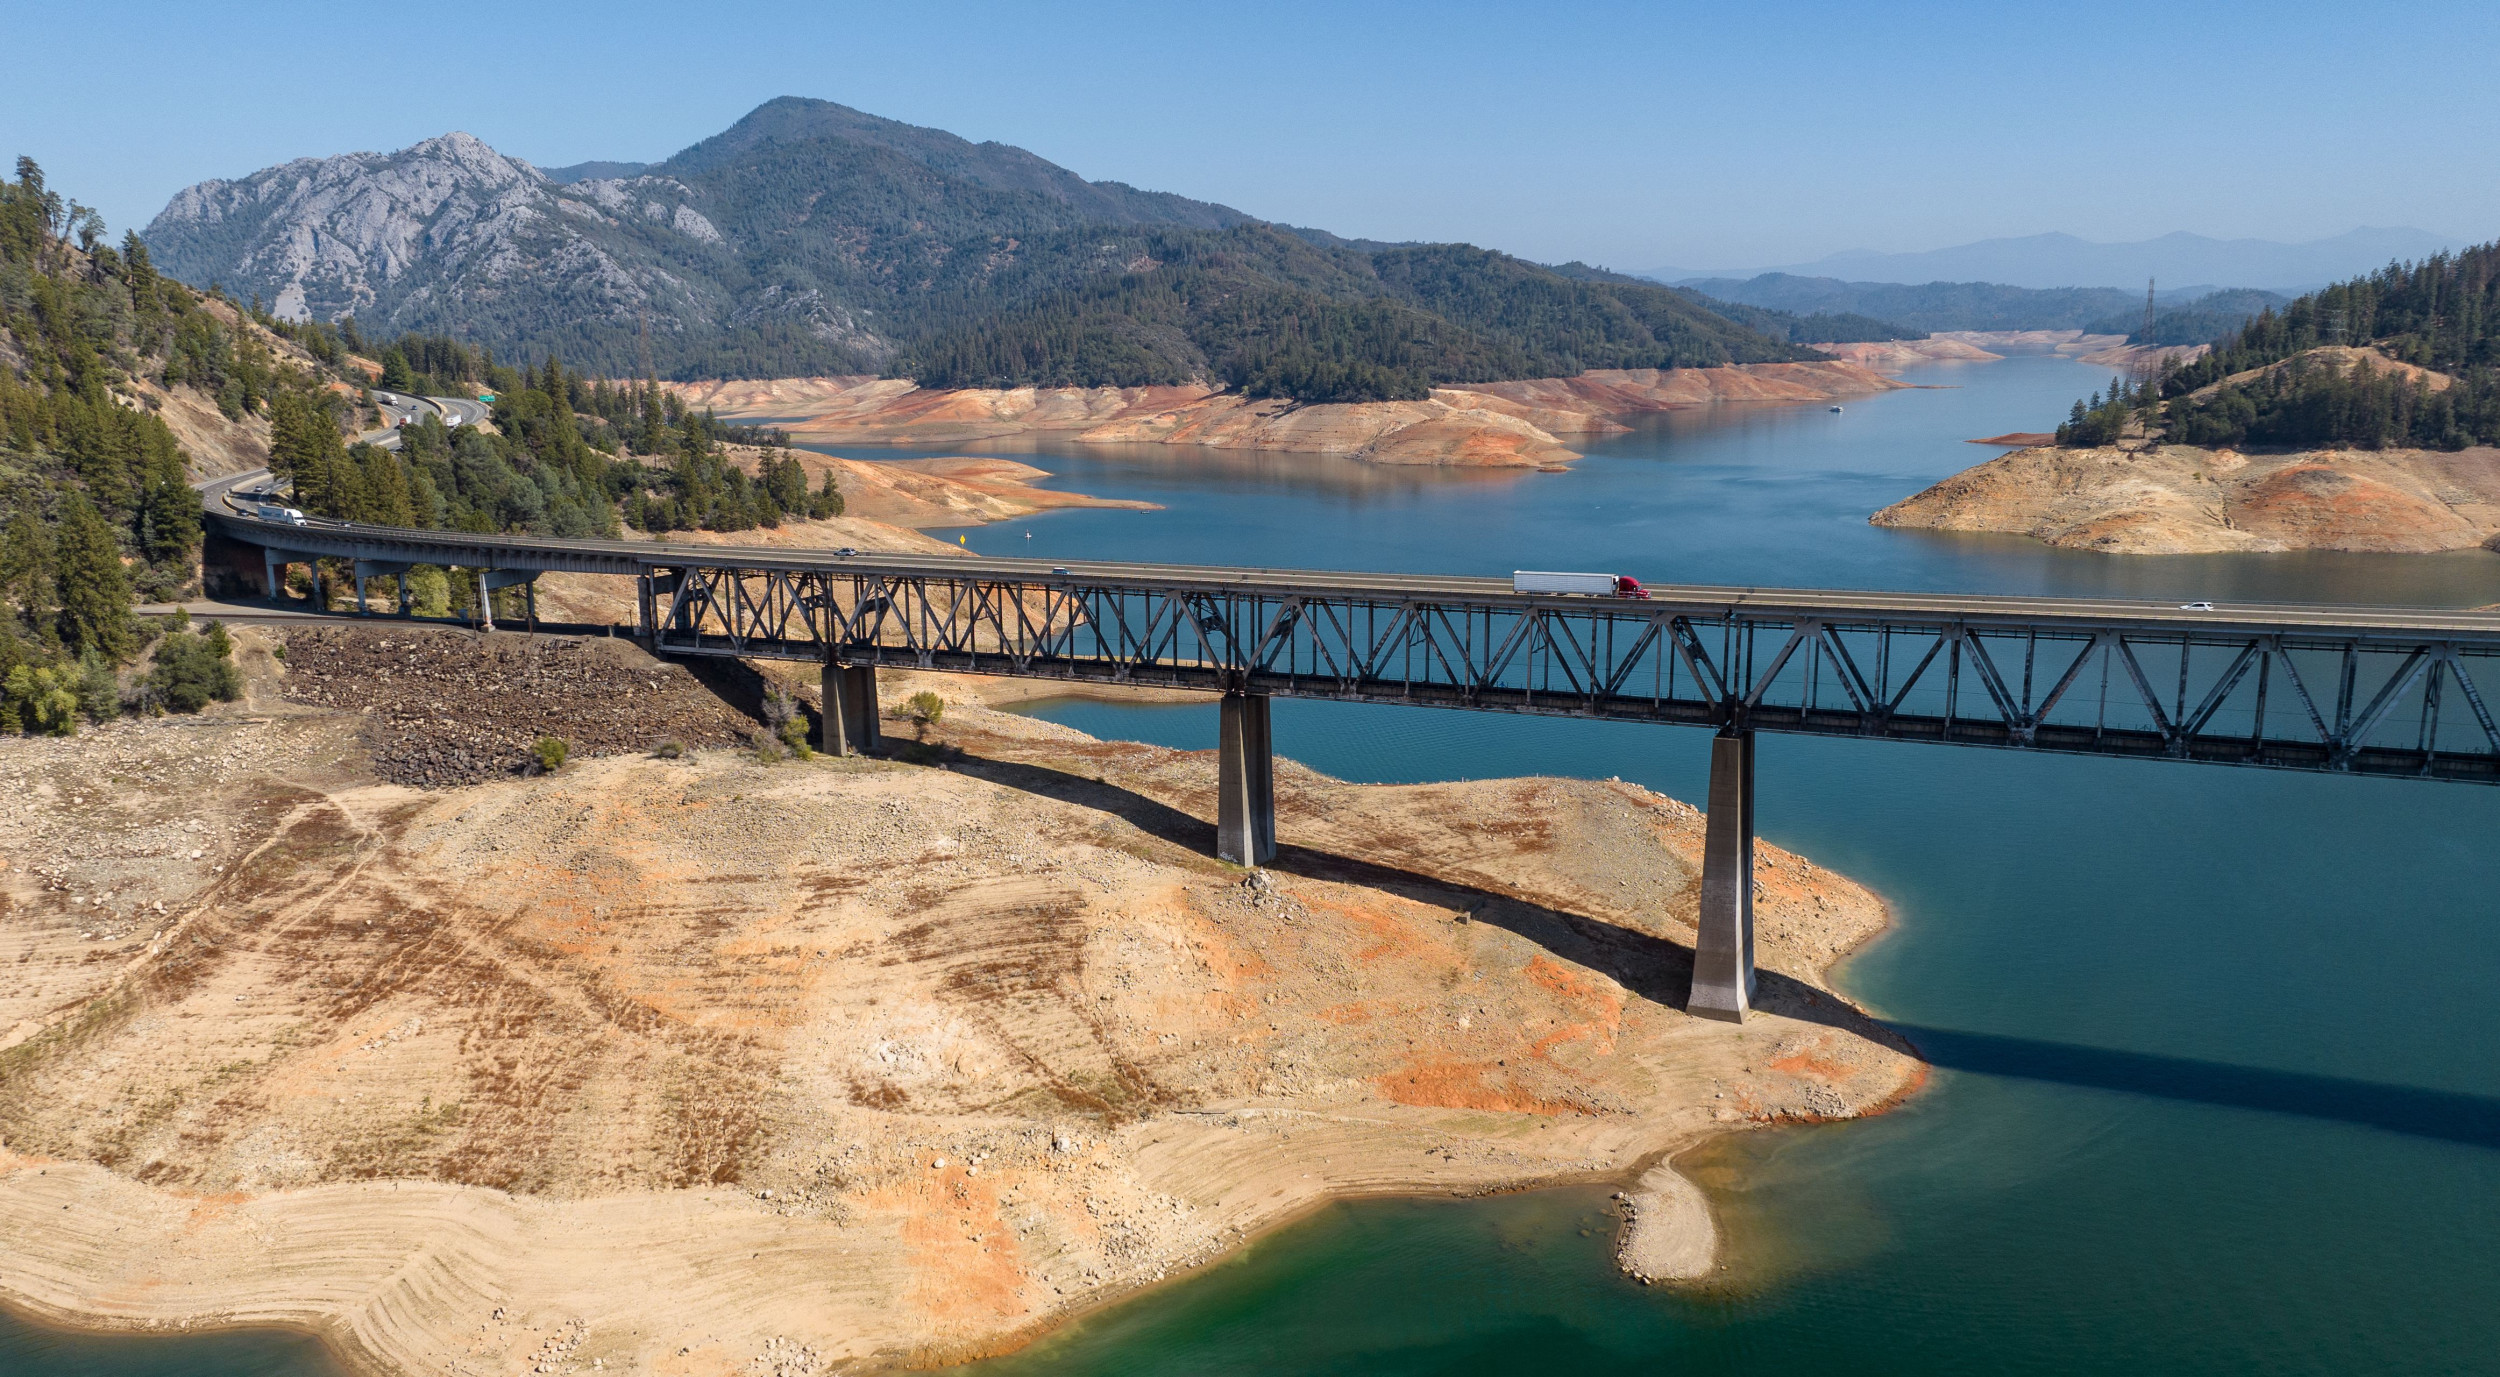 Мост в озерах 2022. Калифорния водохранилище Шаста. Мост через озеро (2022). Климат Калифорнии. Нэшнл Сити Калифорния.